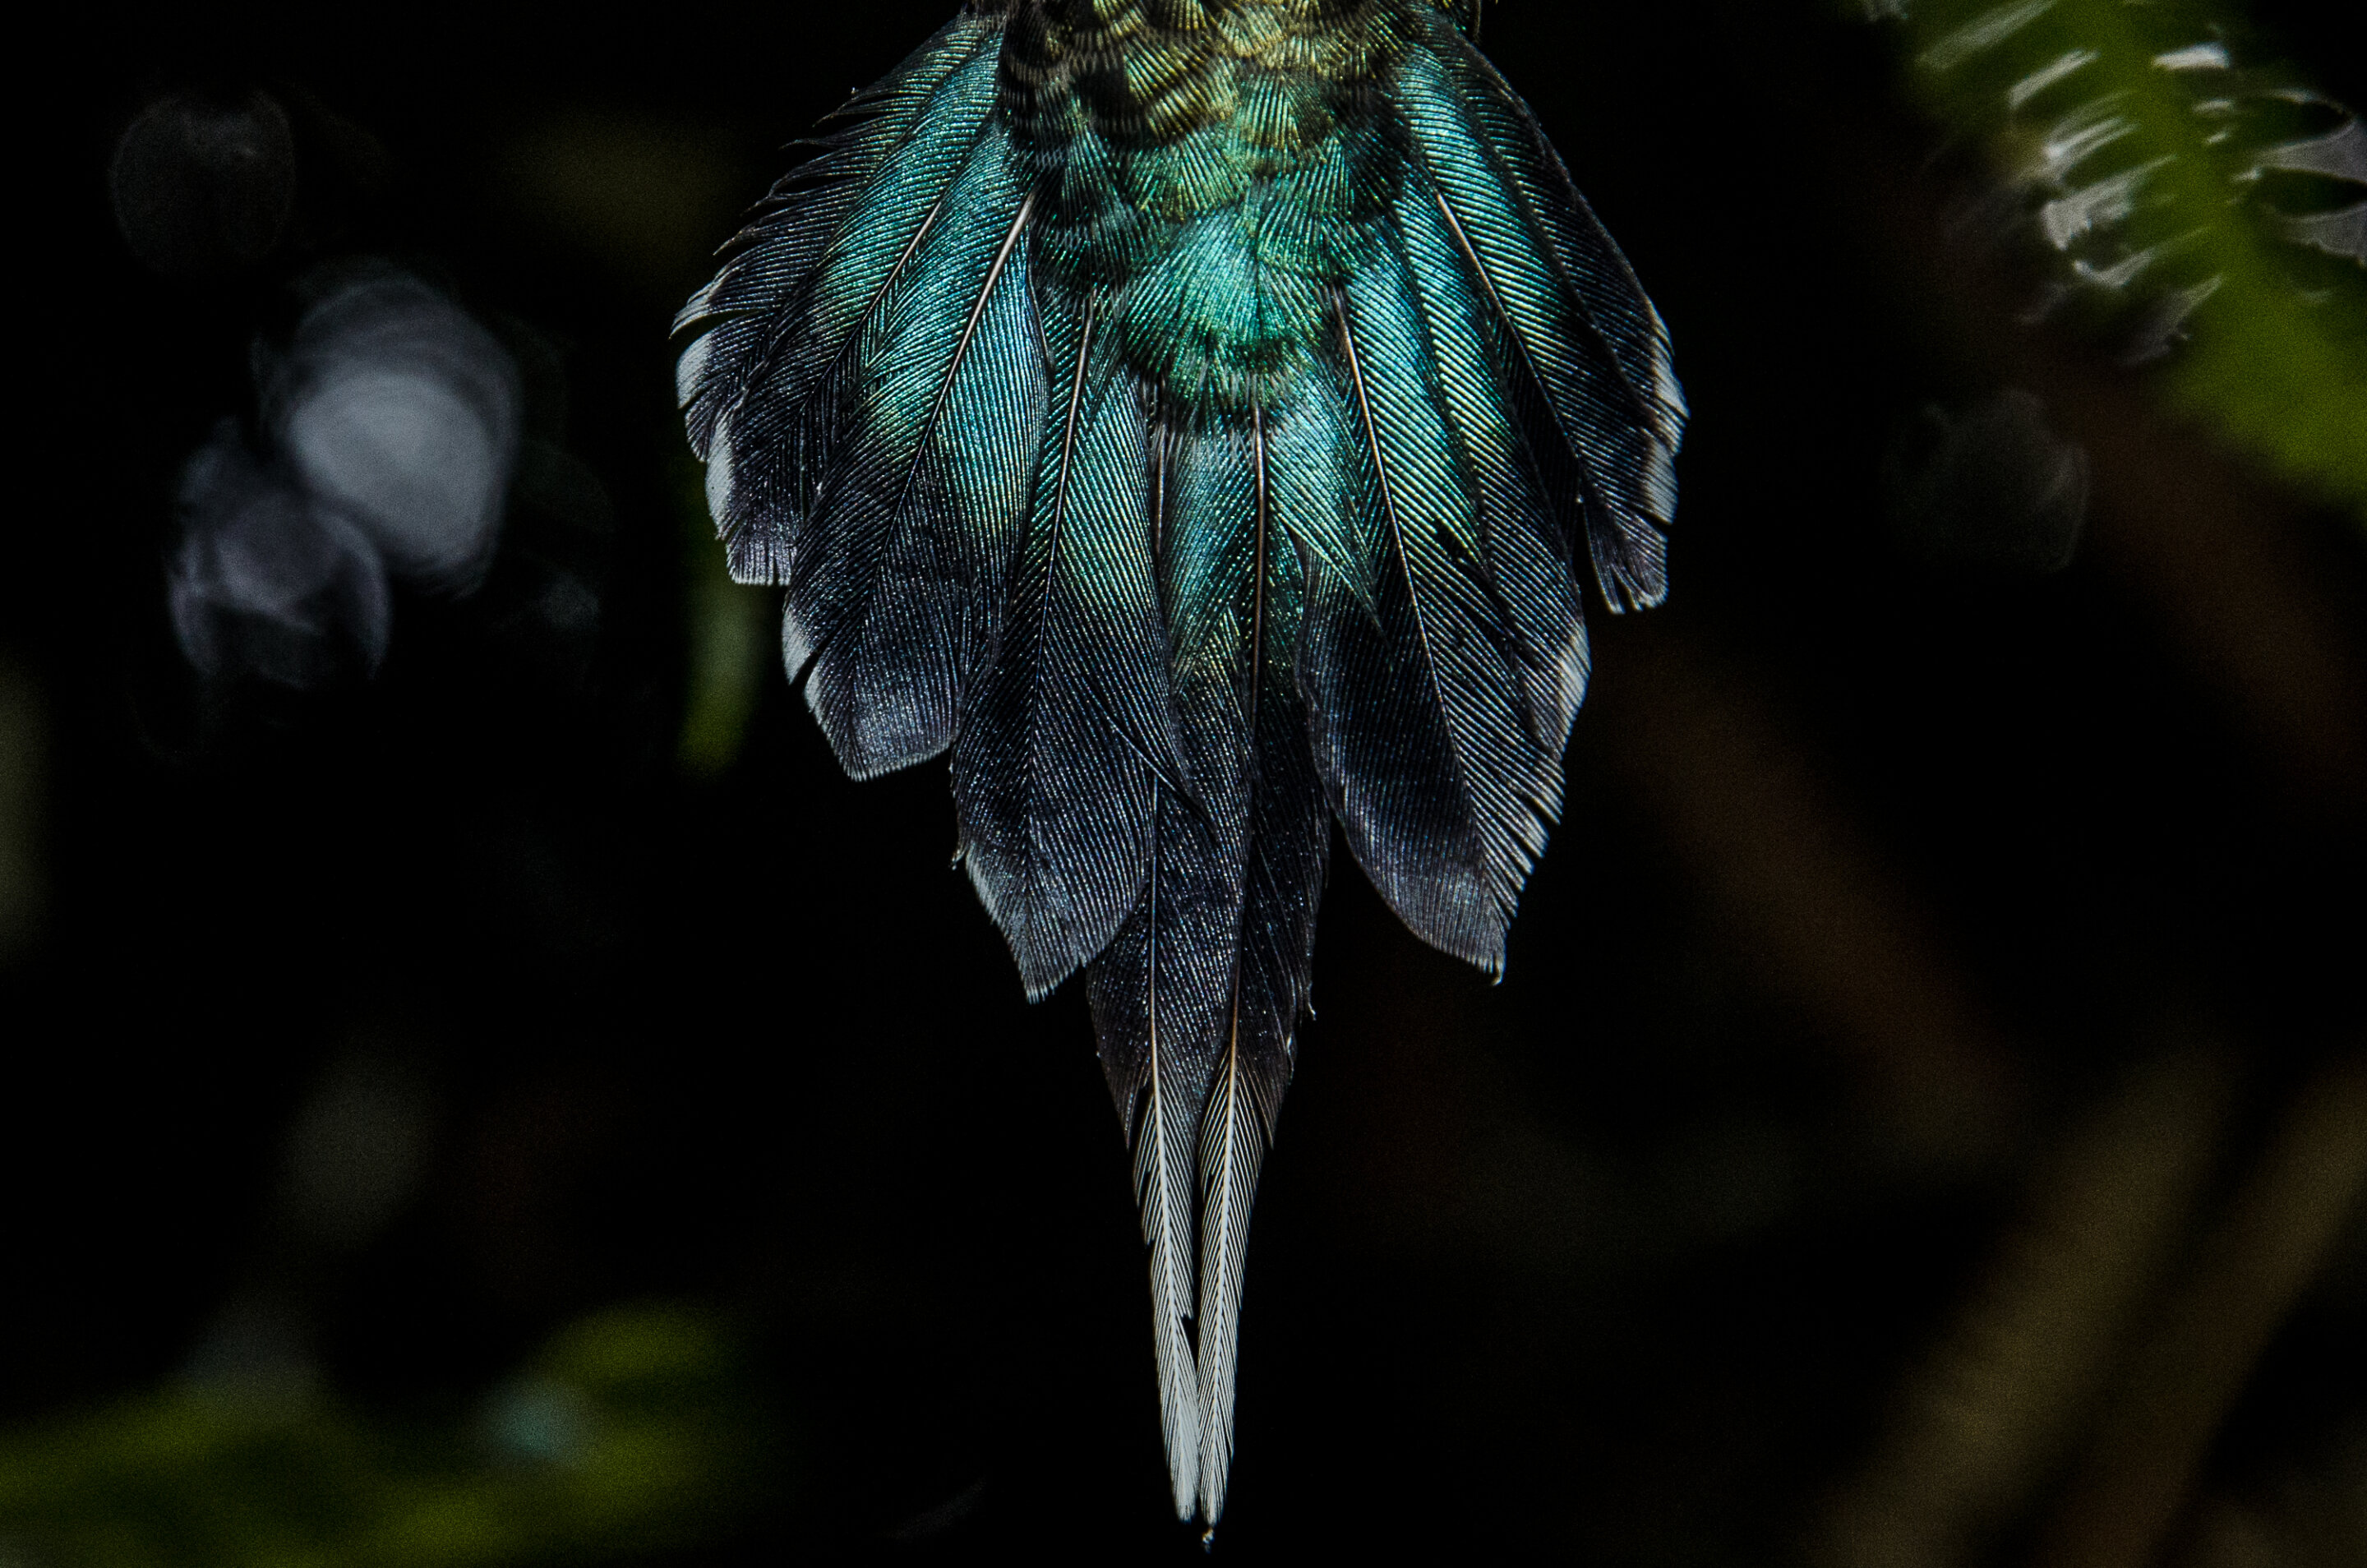 Iridescence in bird feathers has been demystified